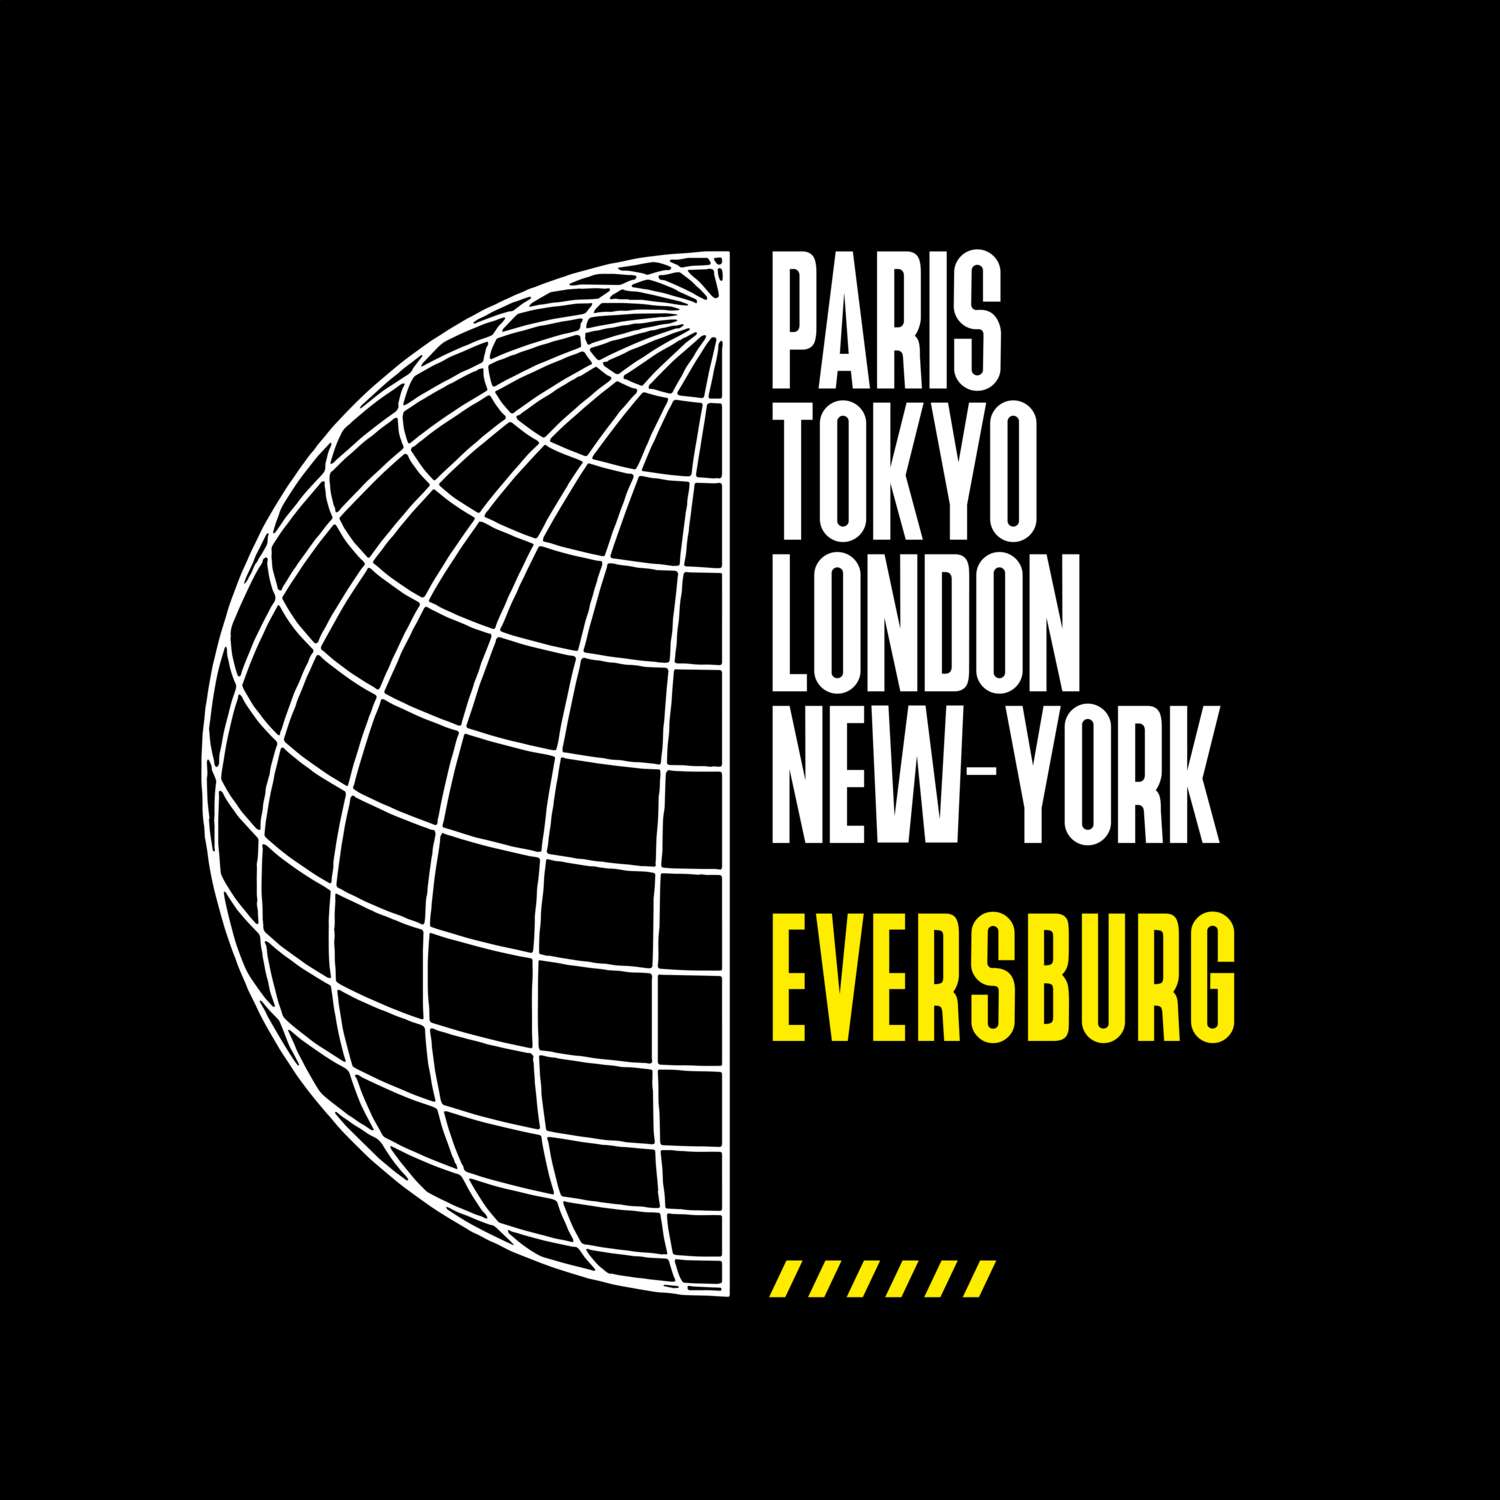 Eversburg T-Shirt »Paris Tokyo London«